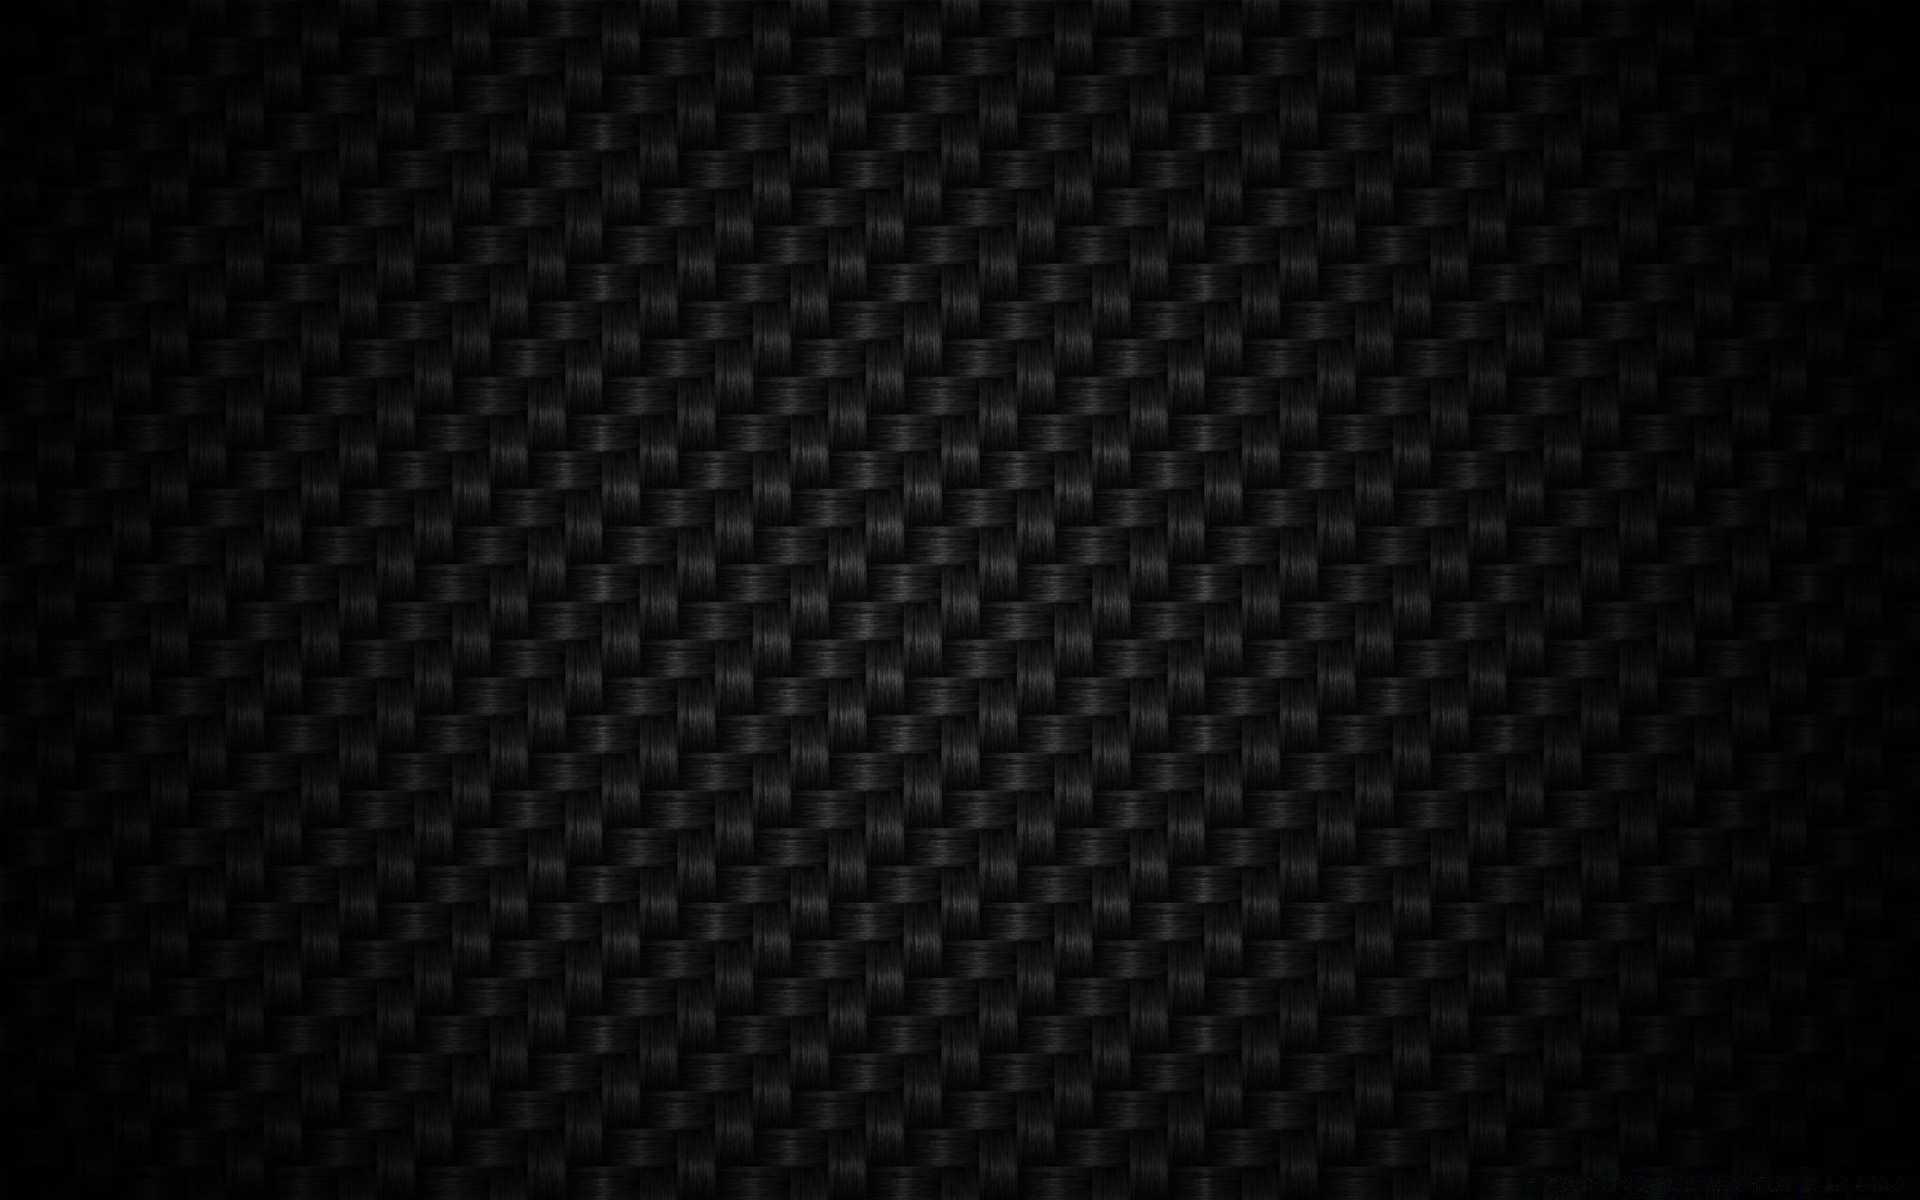 black fabric design desktop abstract pattern background texture wallpaper luxury canvas surface rough textile fiber